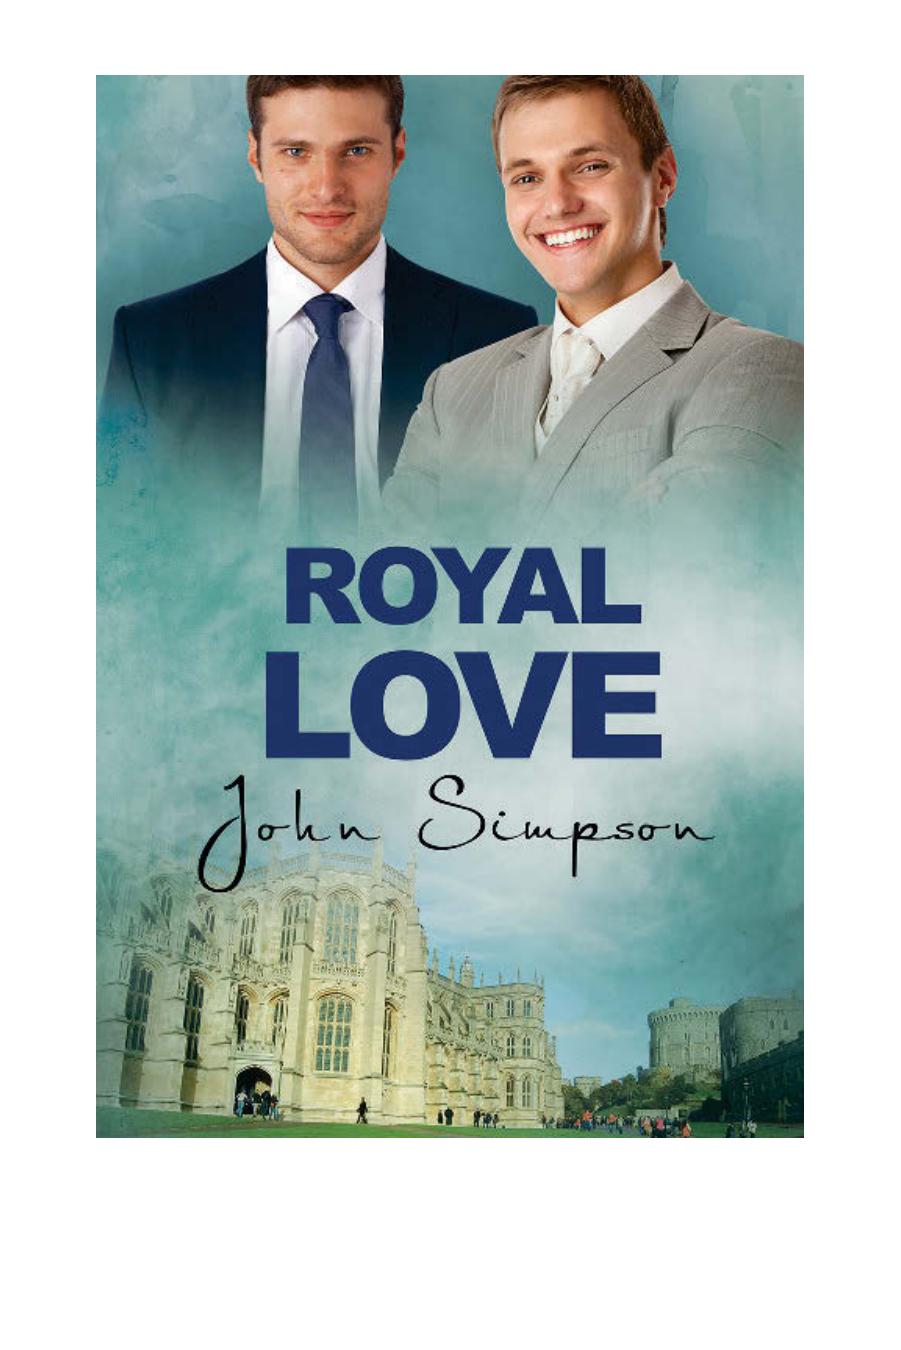 Royal Love by John Simpson